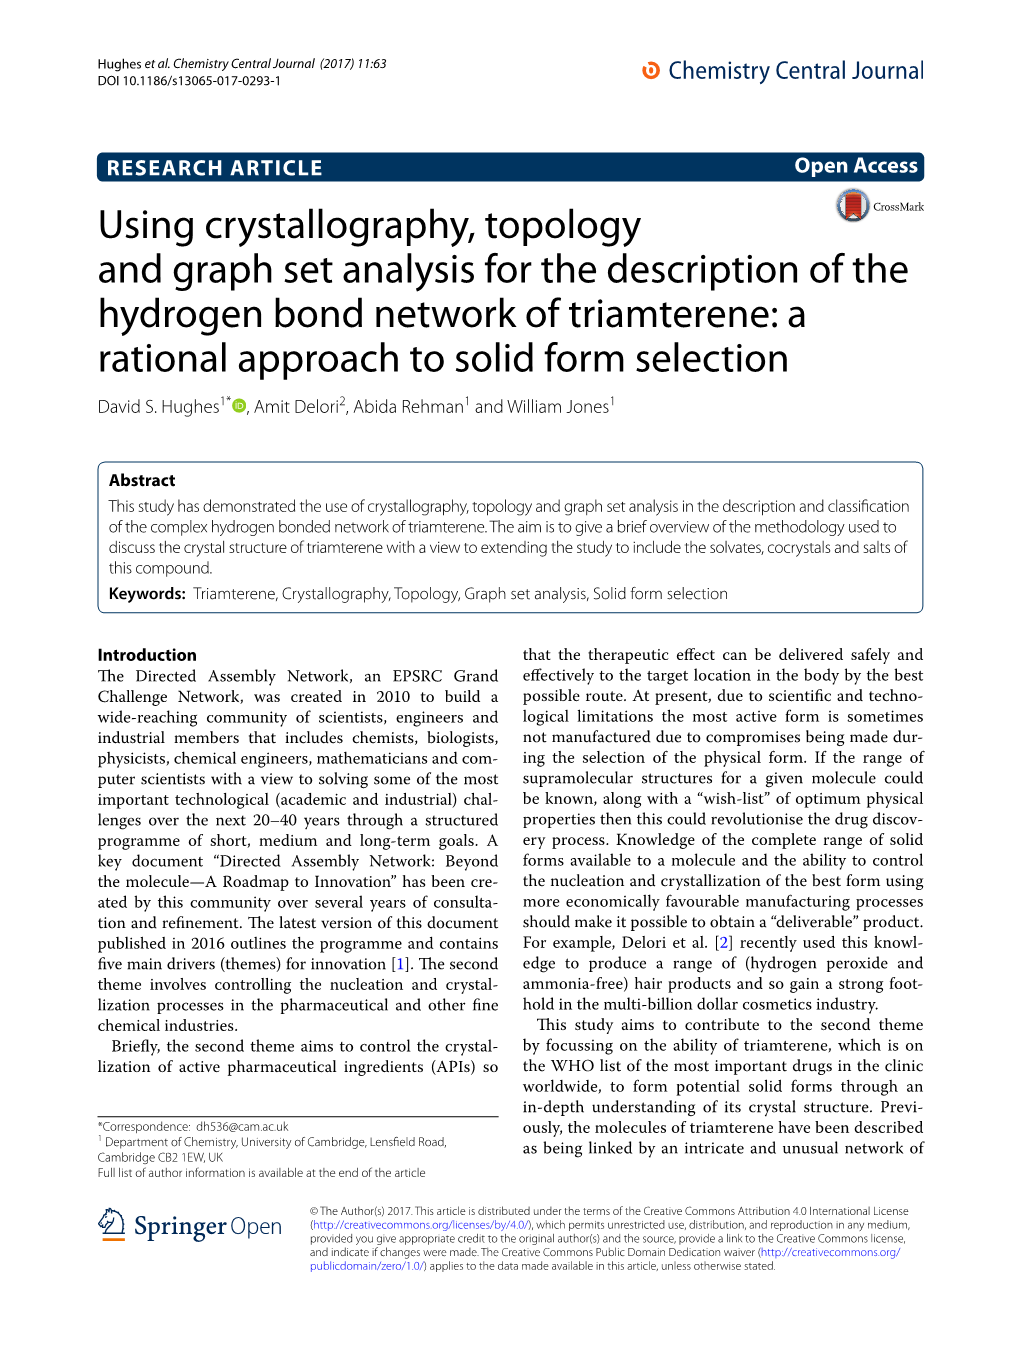 Using Crystallography, Topology and Graph Set Analysis